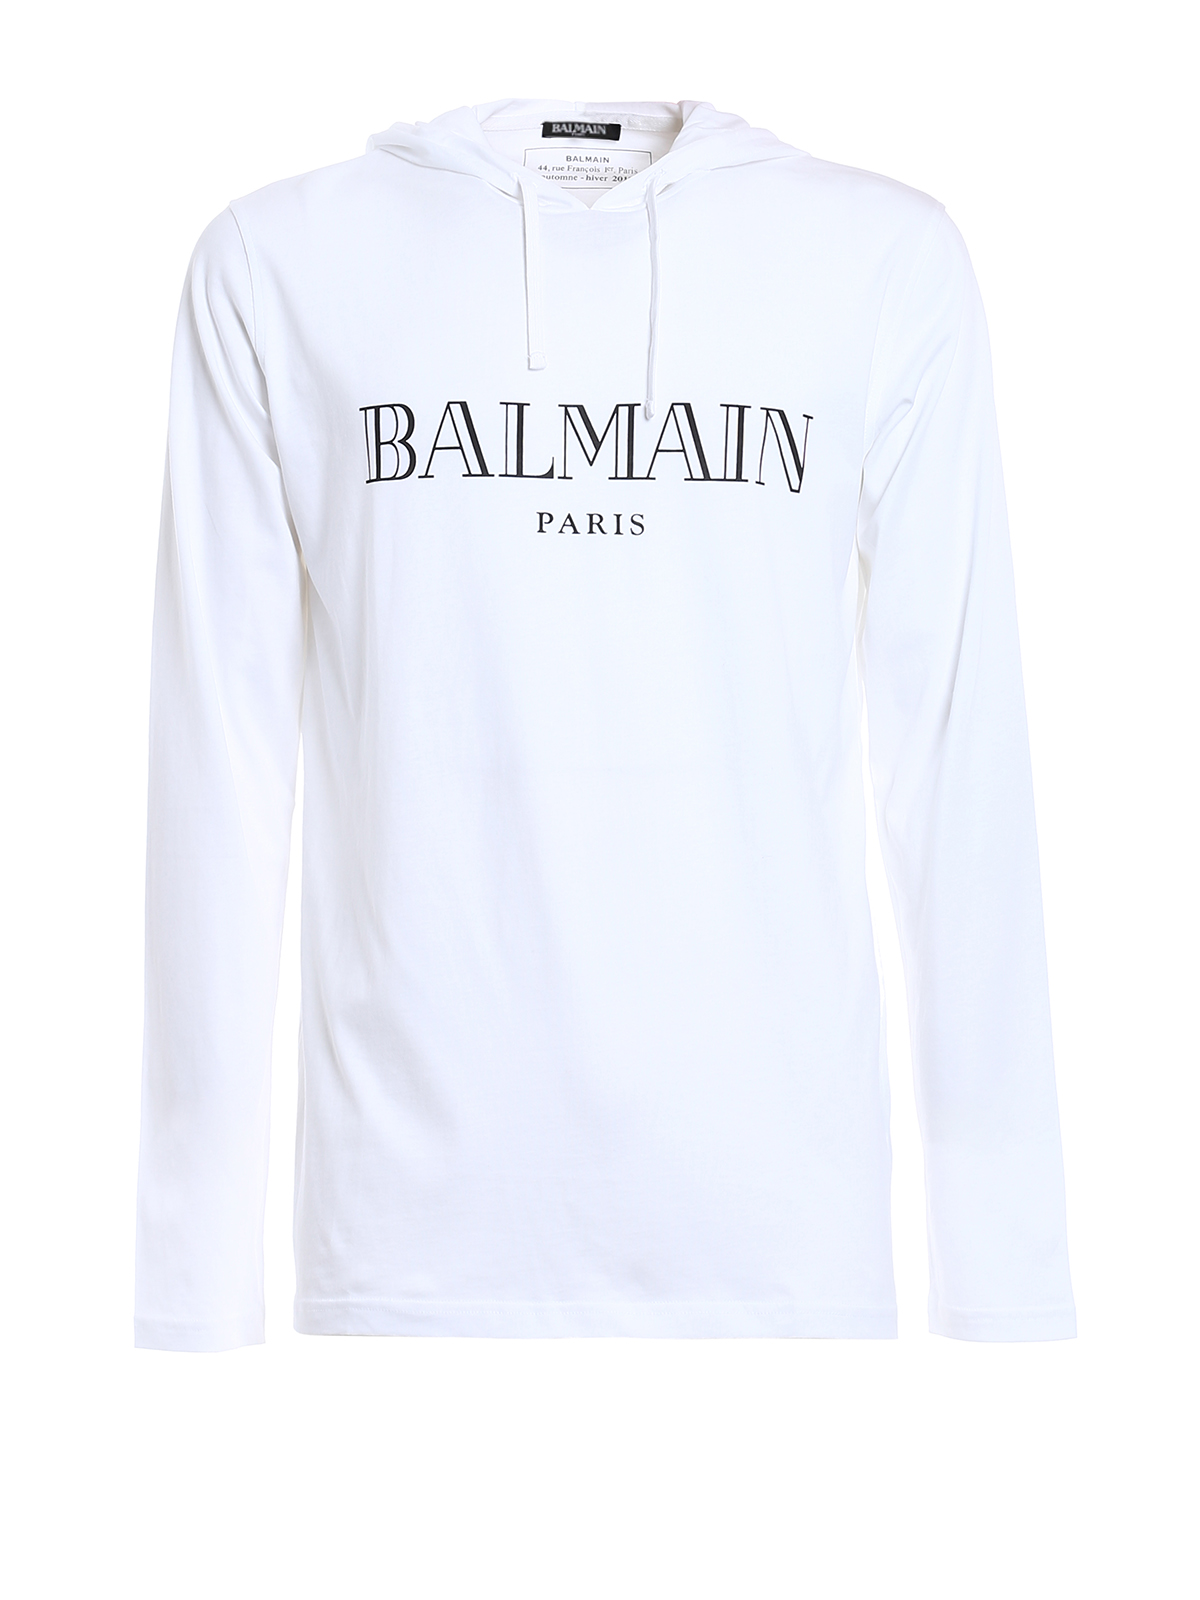 balmain long sleeve t shirt